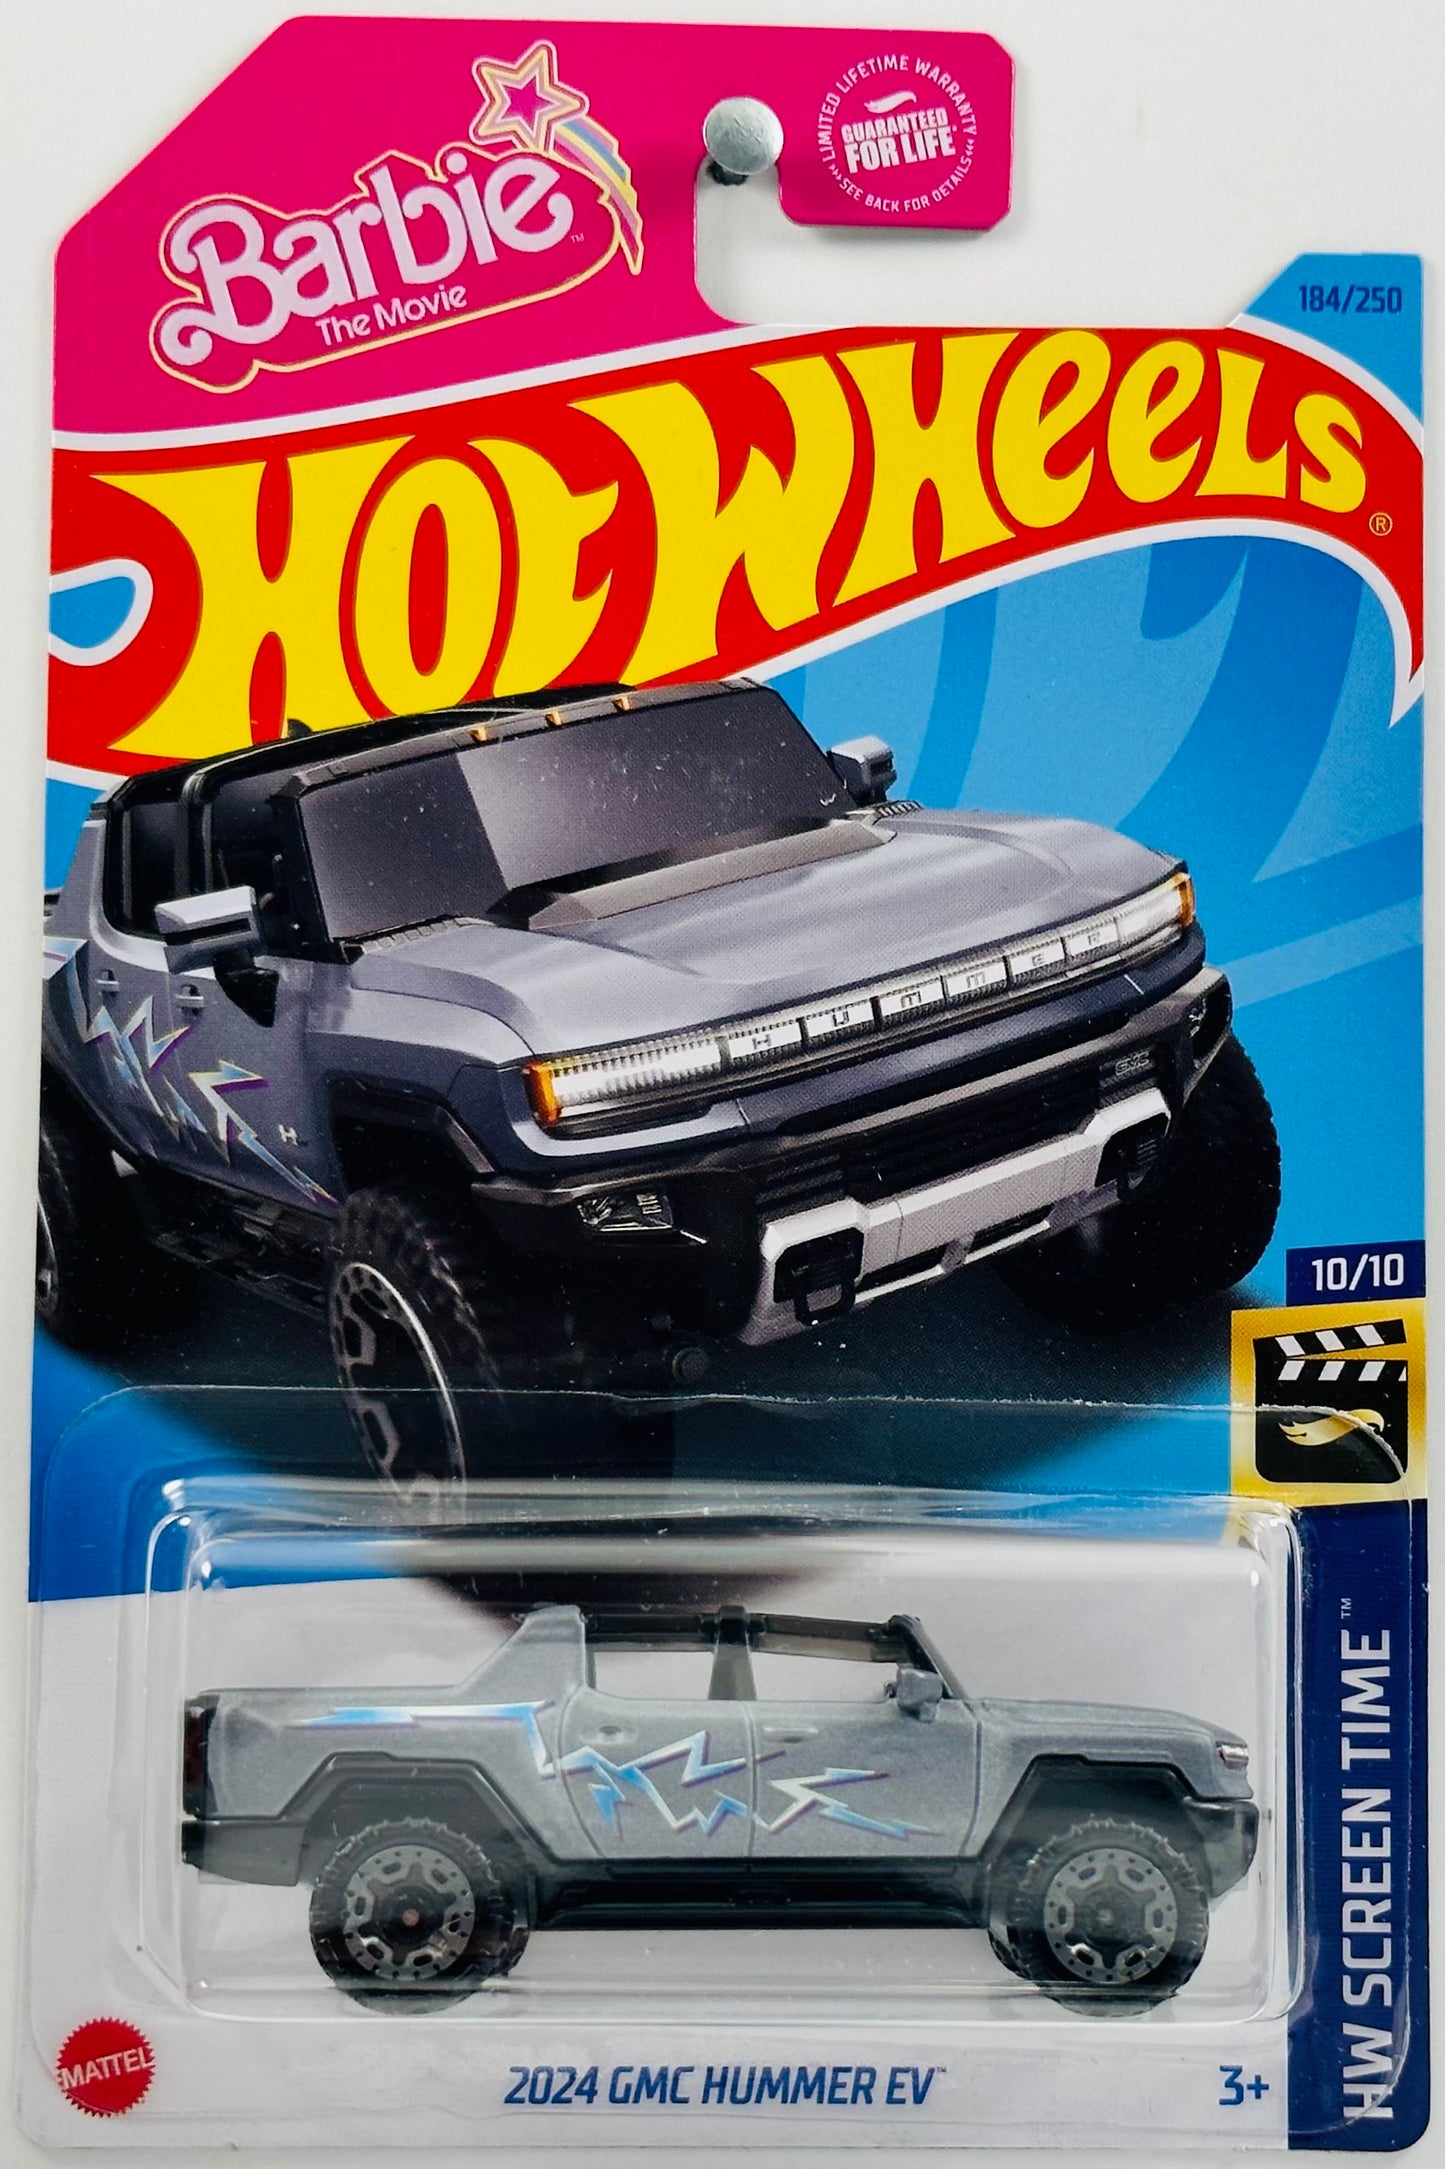 Hot Wheels 2023 - Collector # 184/250 - HW Screen Time 10/10 - 2024 GMC Hummer EV - Meteorite Metallic - Barbie: The Movie - USA